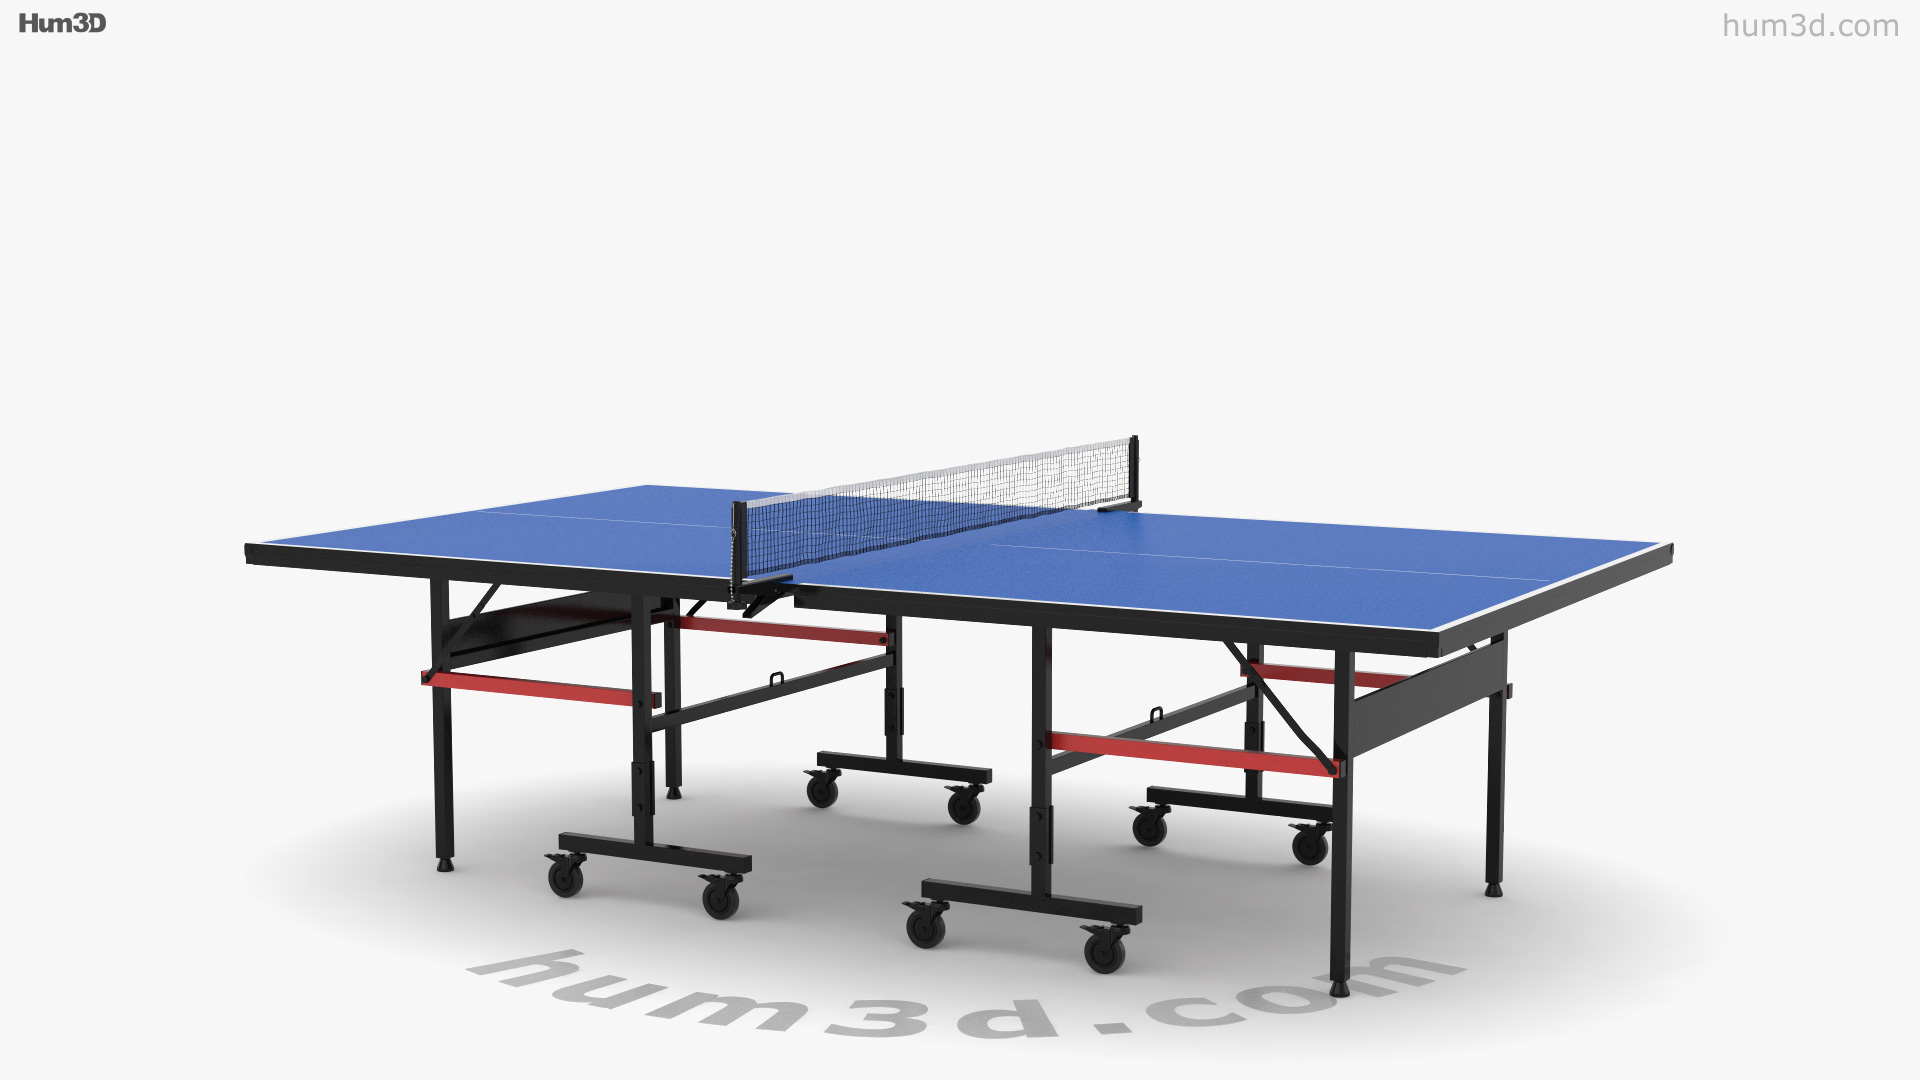 Ping Pong 3D Online